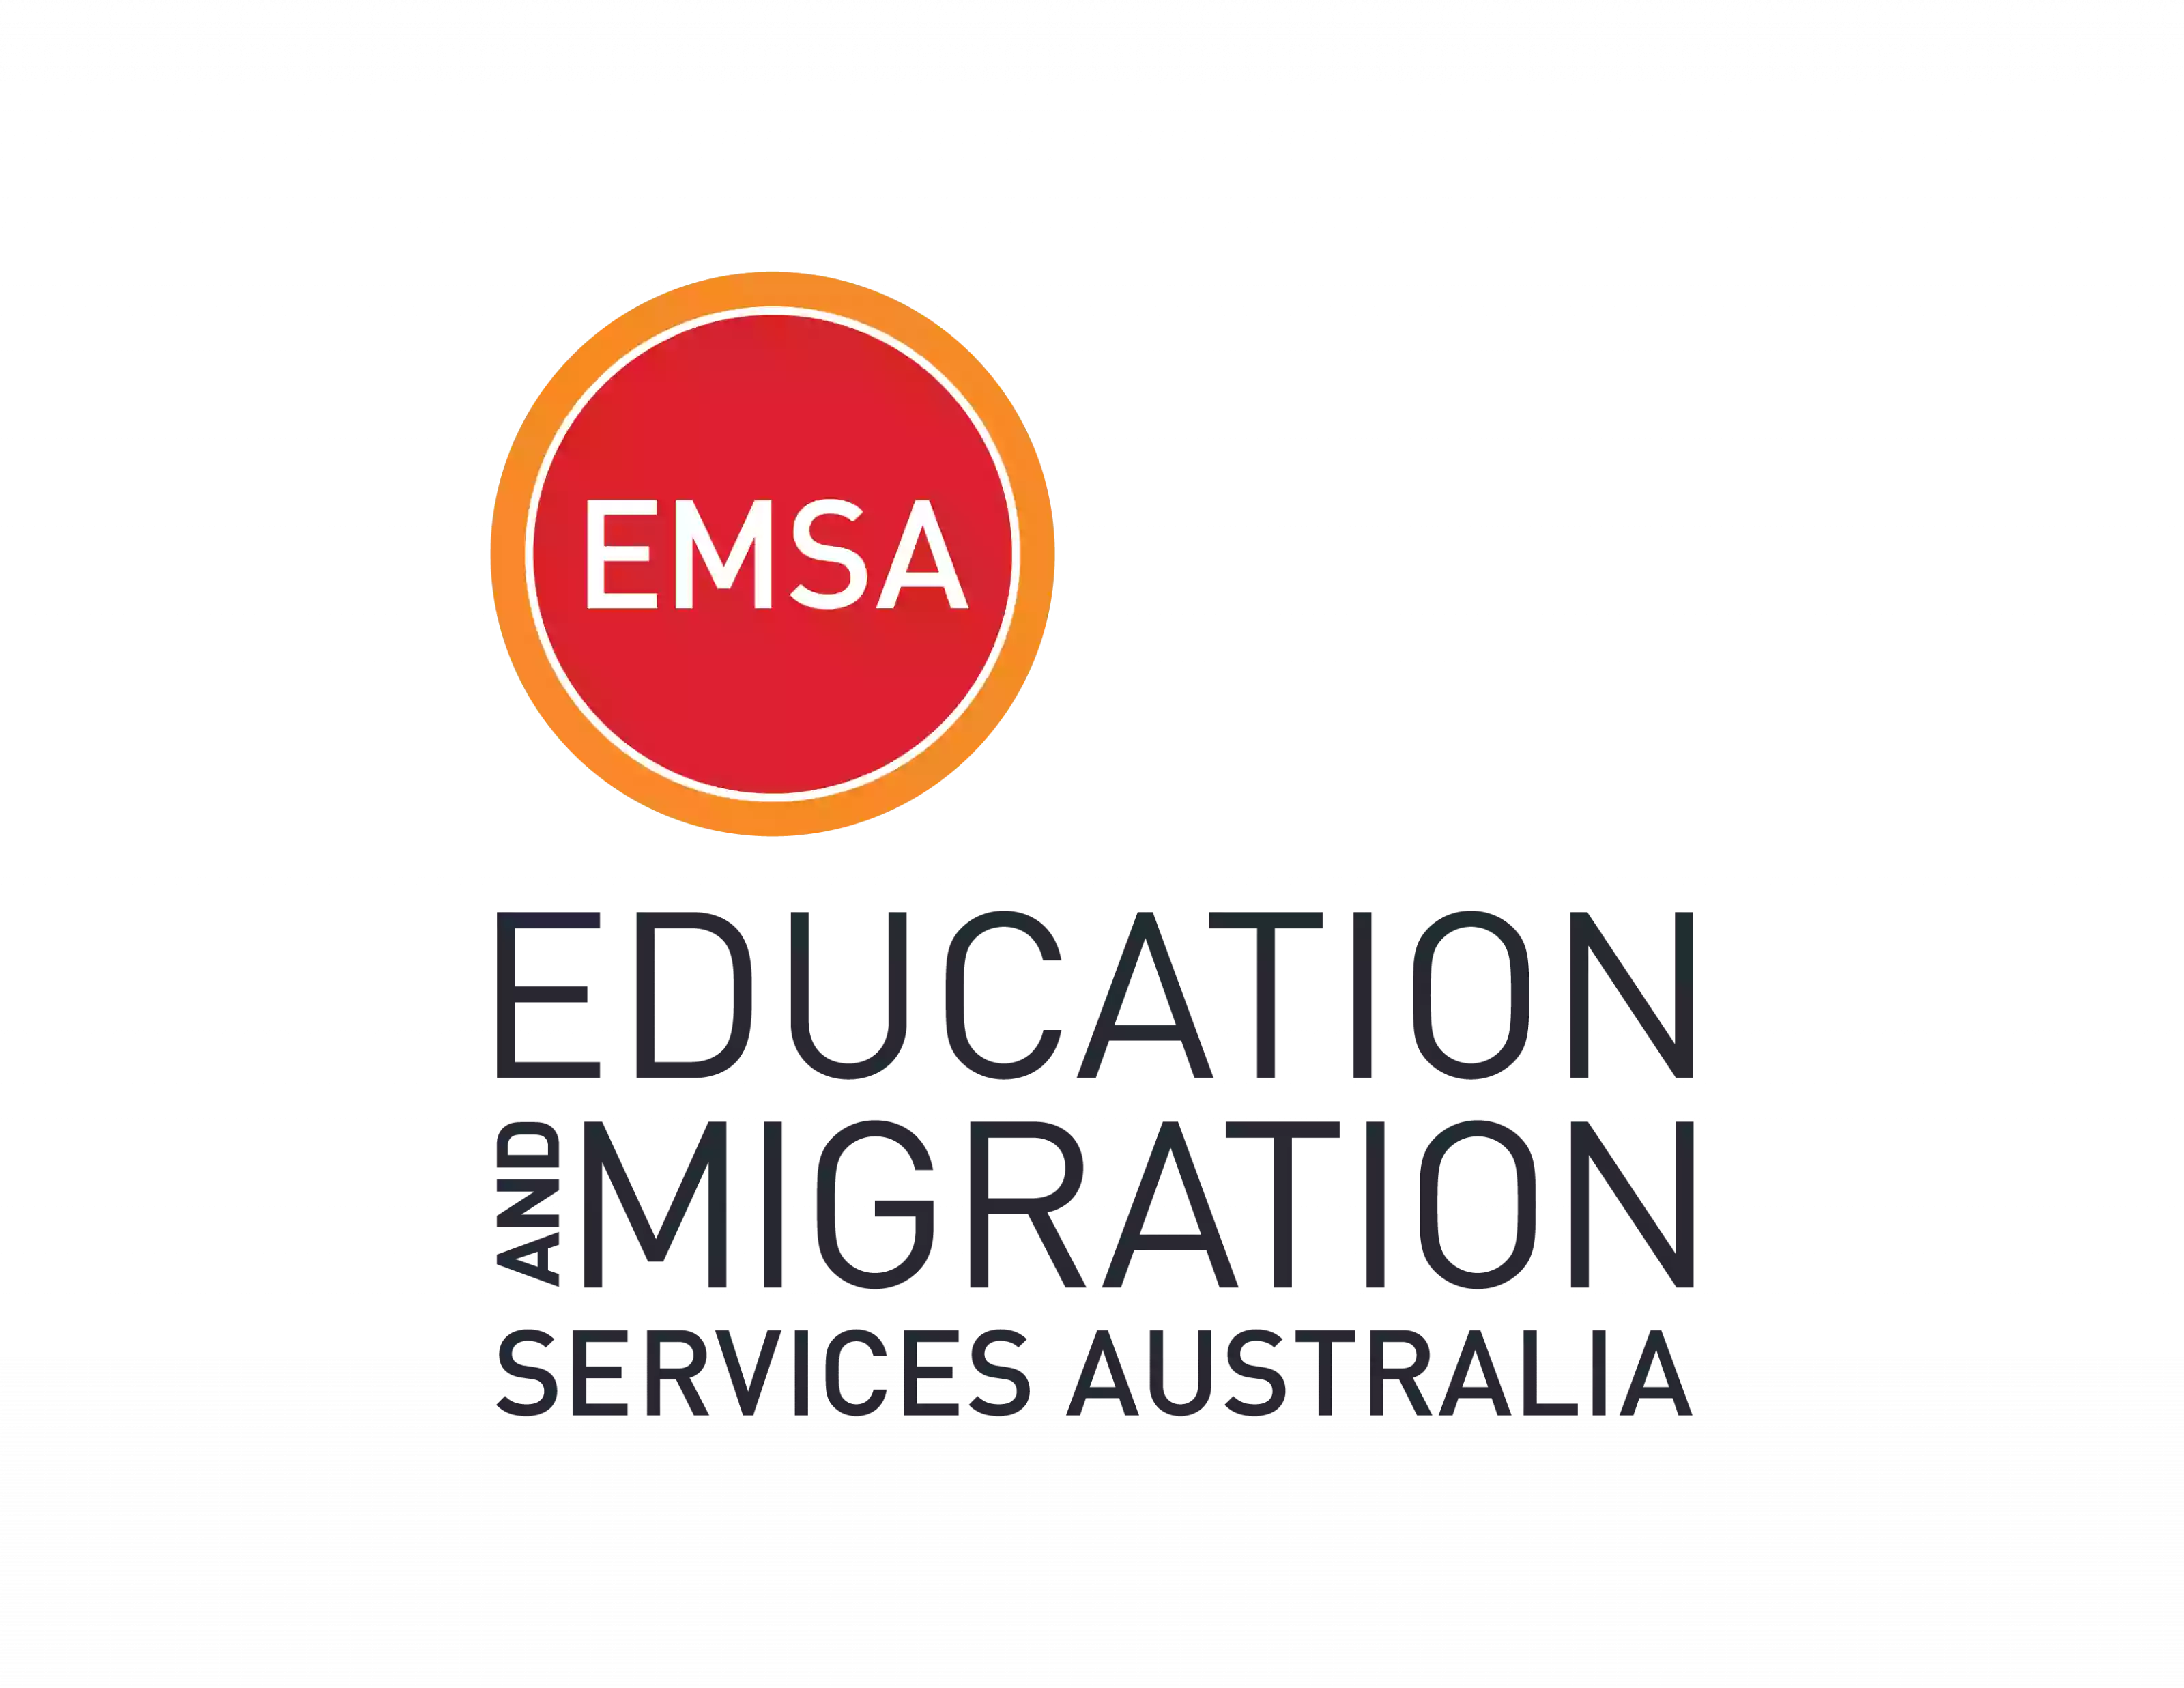 EMSA Brisbane - Education and Migration Services Australia